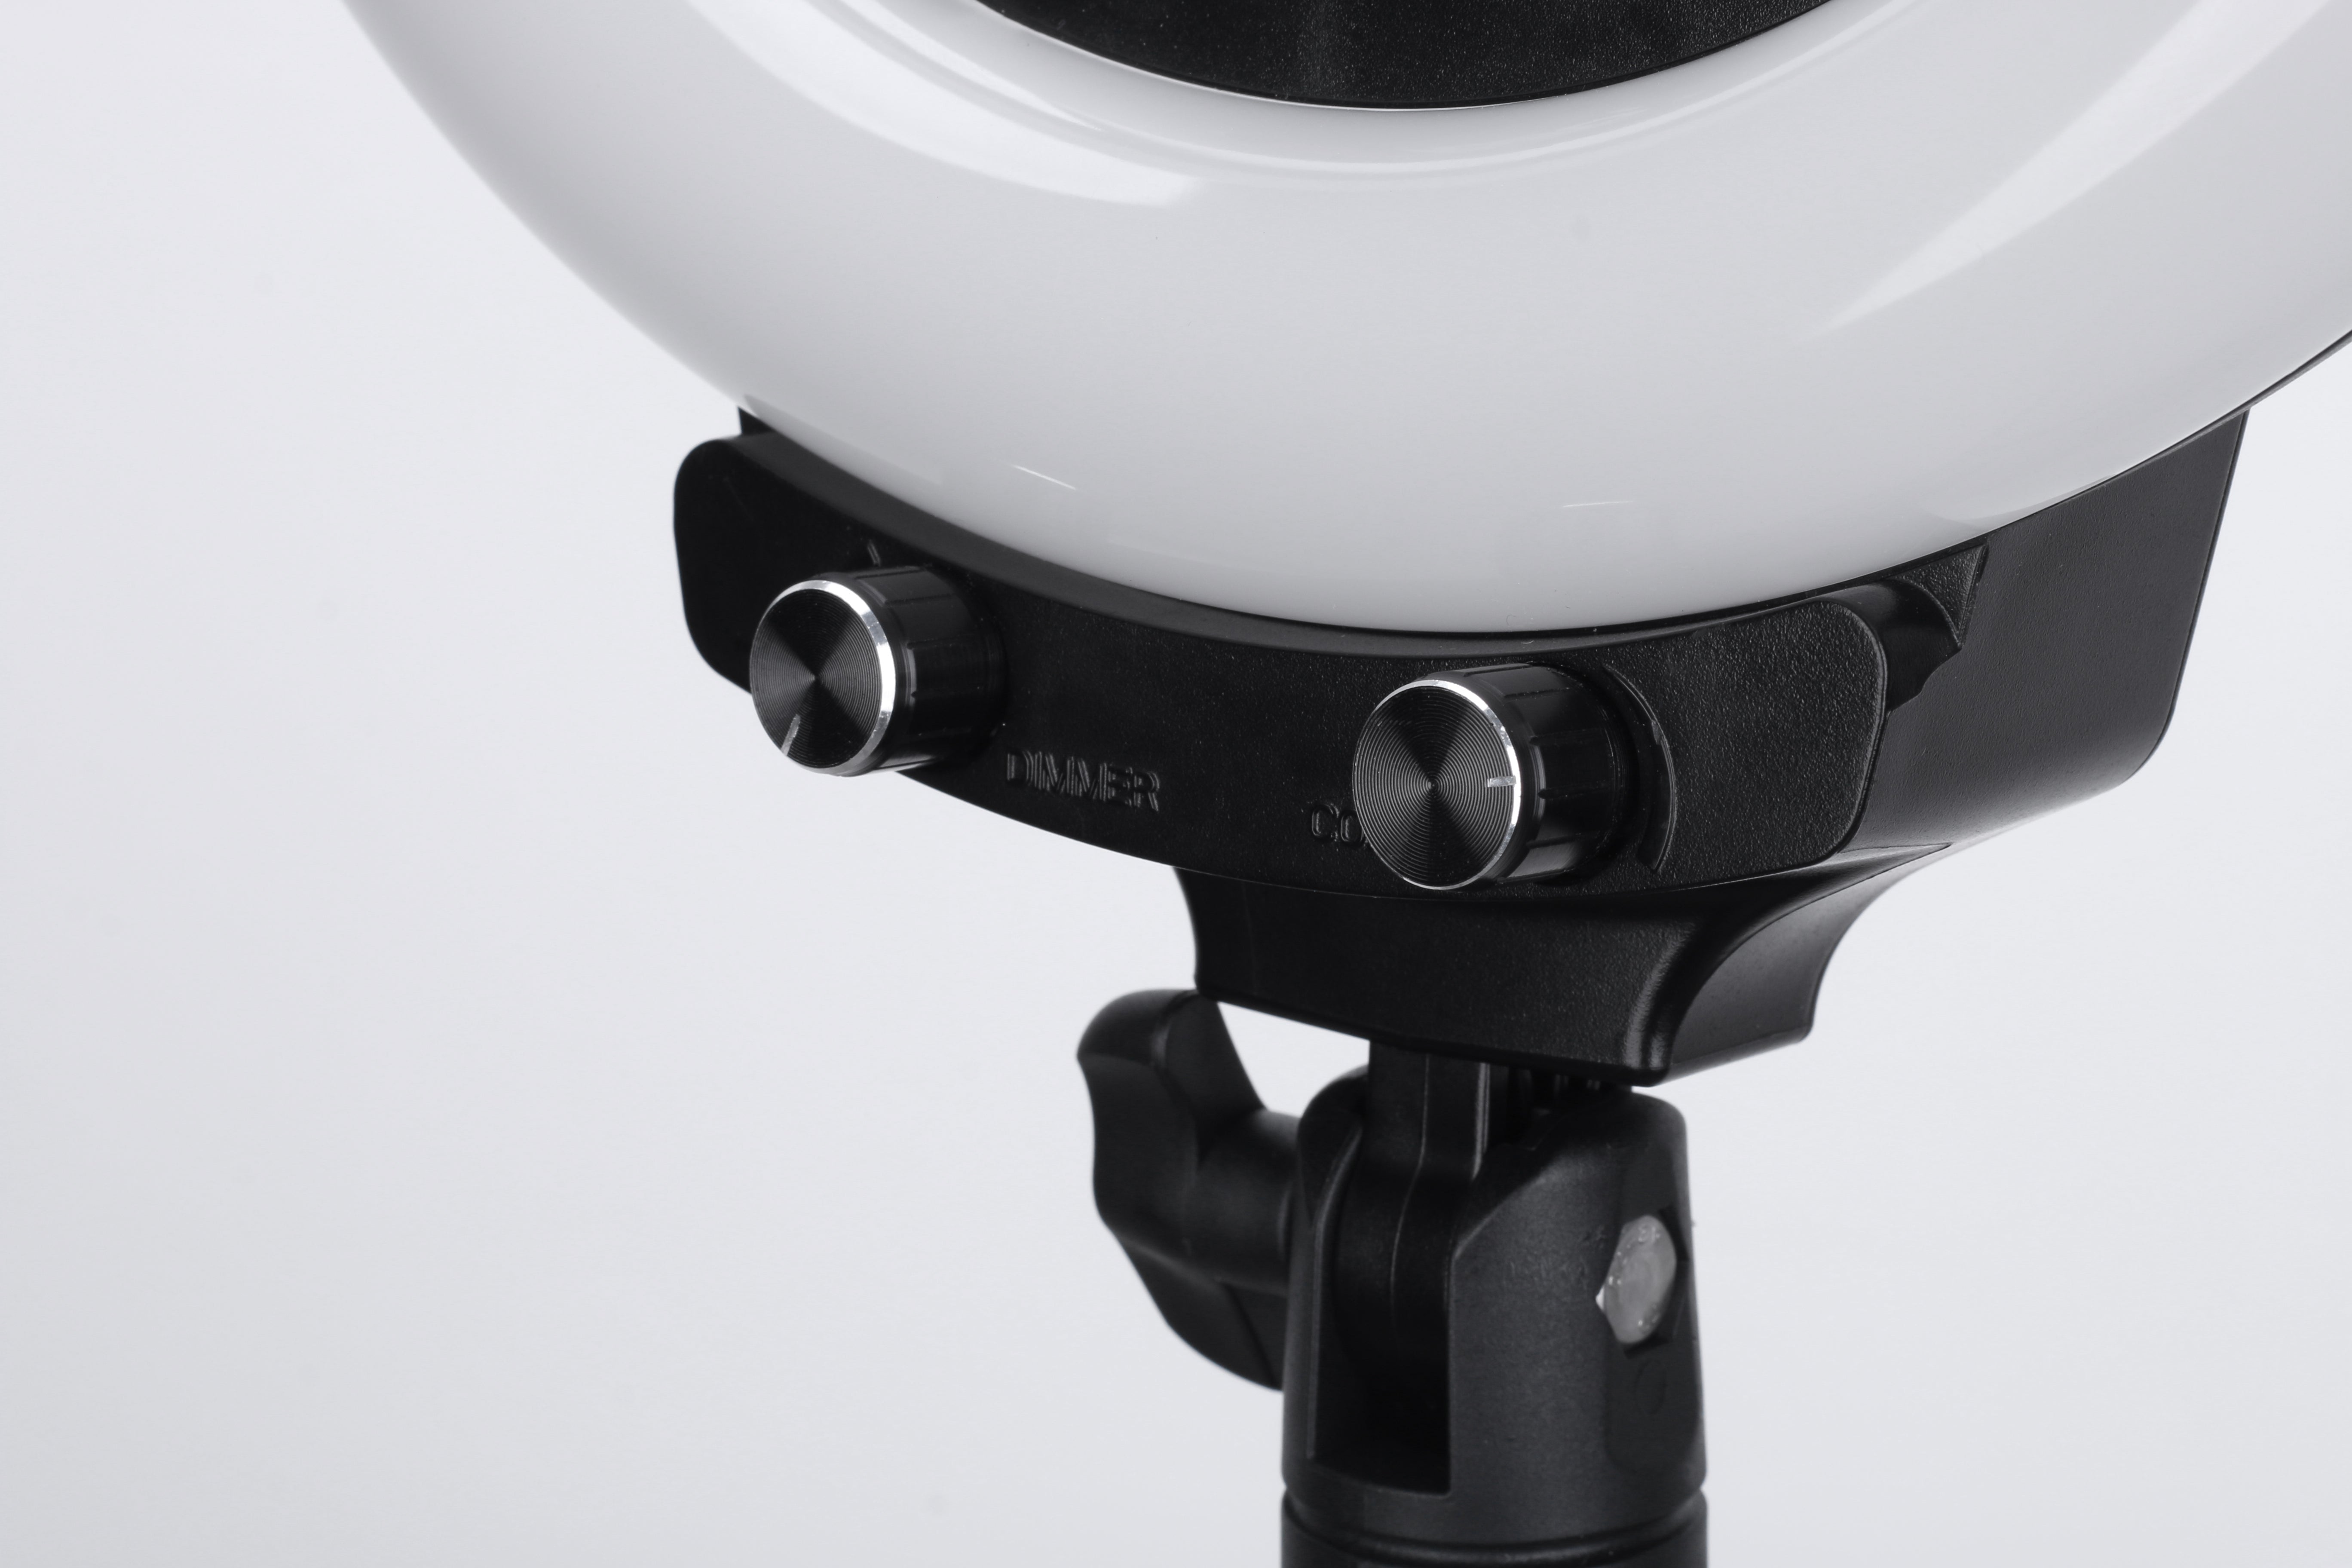 HALO Travel Pro 10” LED Ring Light Vlogging Series New | eBay